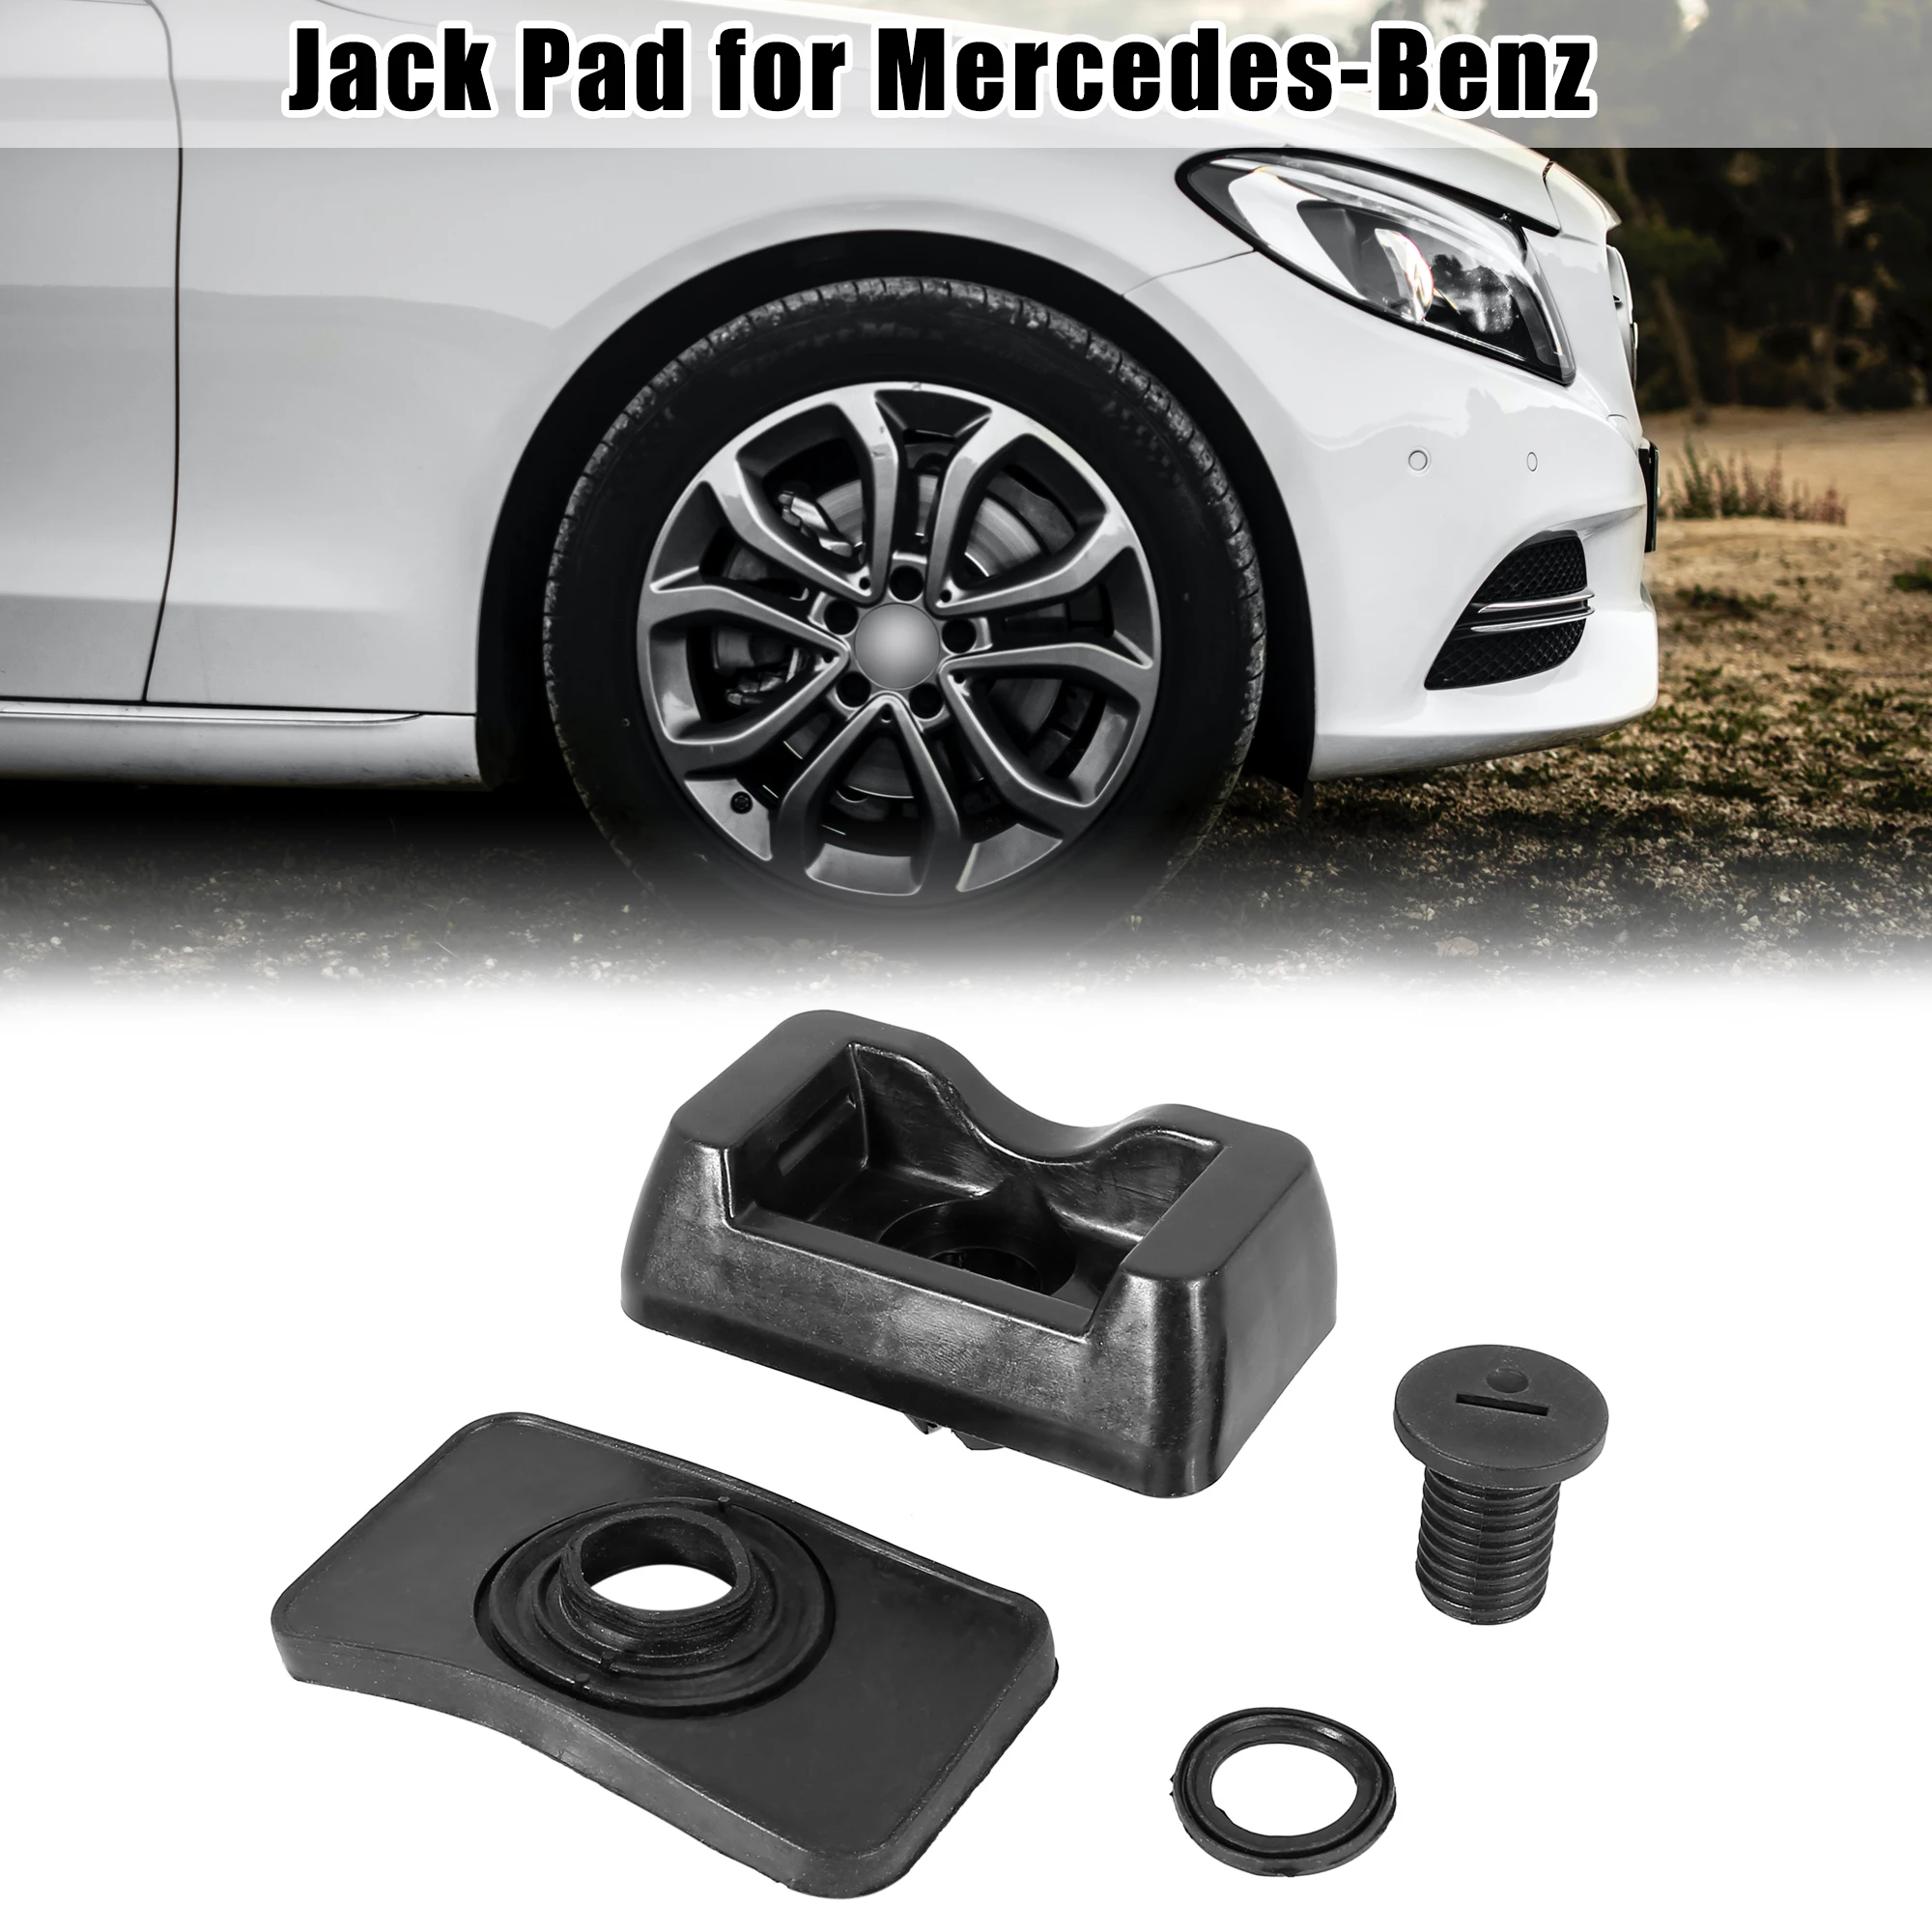 

X Autohaux 2039970186 Car Jack Point Pad Jacking Support Plug Lift Block for Mercedes-Benz W203 C230 CLK320 E320 SLK280